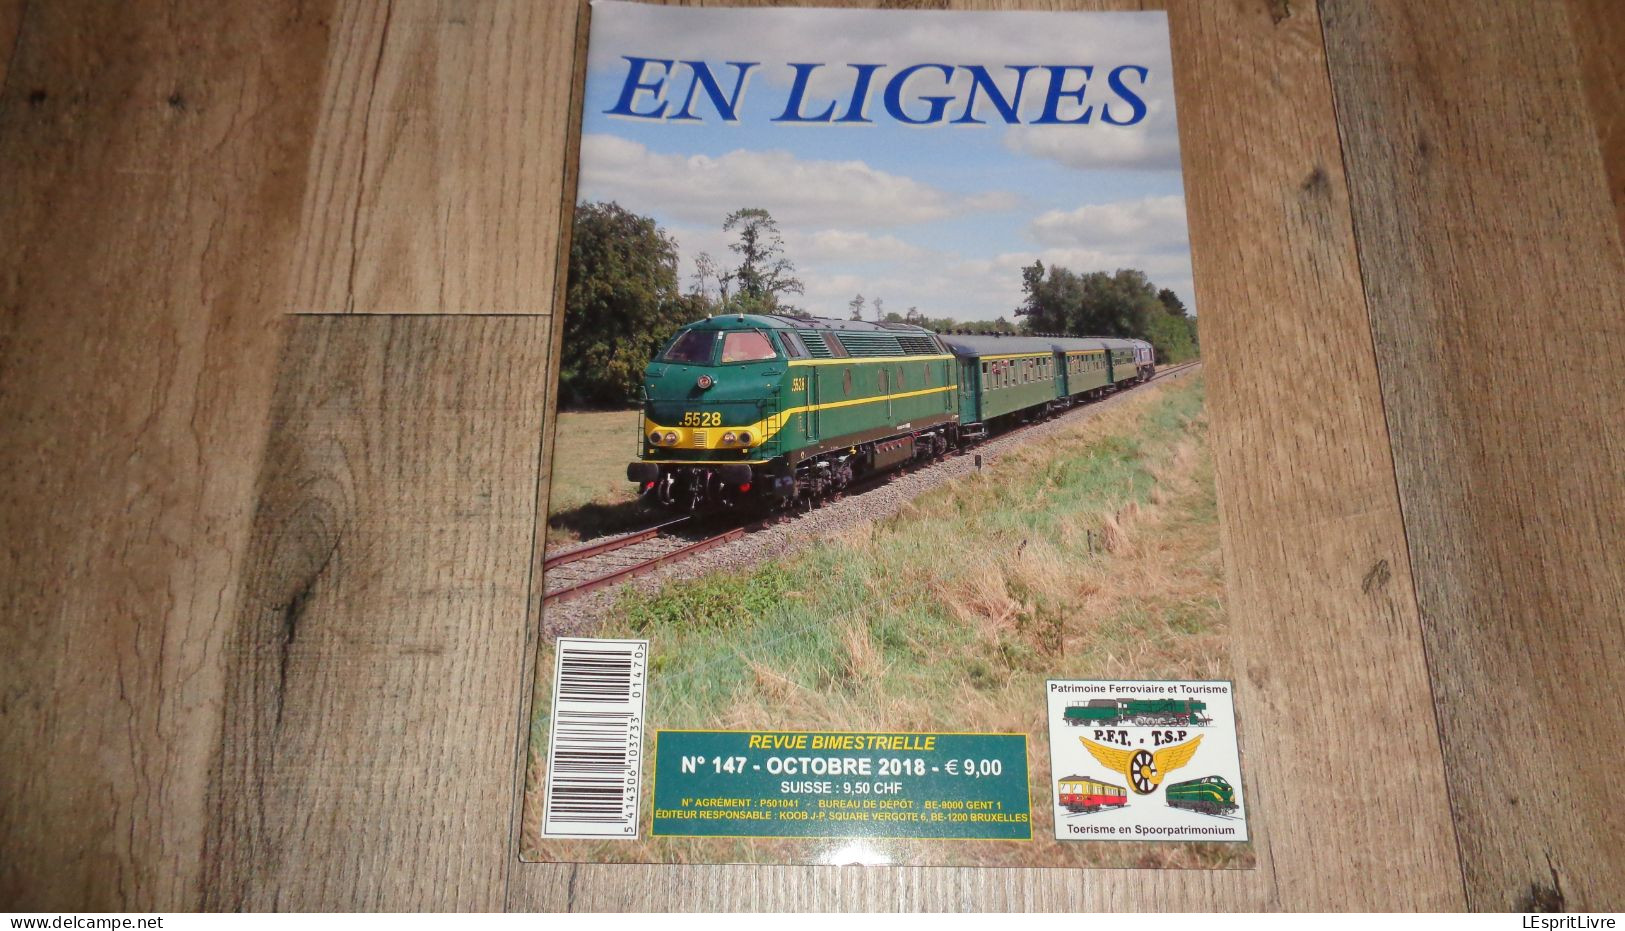 EN LIGNES Revue Ferroviaire N° 147 SNCB NMBS Chemins De Fer Locomotive Vapeur Type 10 Wagon Extensible Transport - Ferrocarril & Tranvías